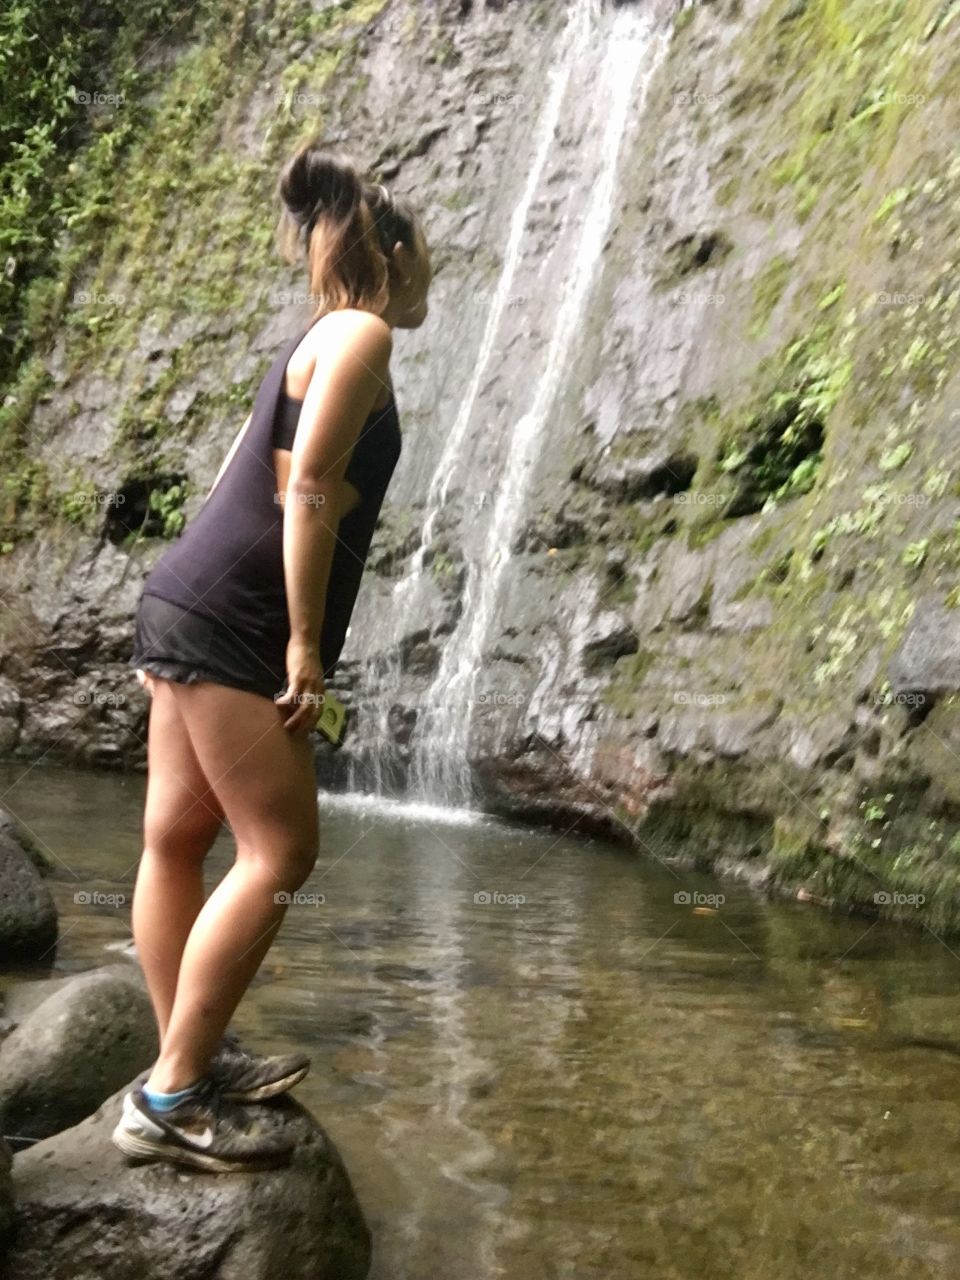 Looking up in awe at the beauty of nature, enjoying the waterfall at Manoa Falls, Oahu Hawai’i 